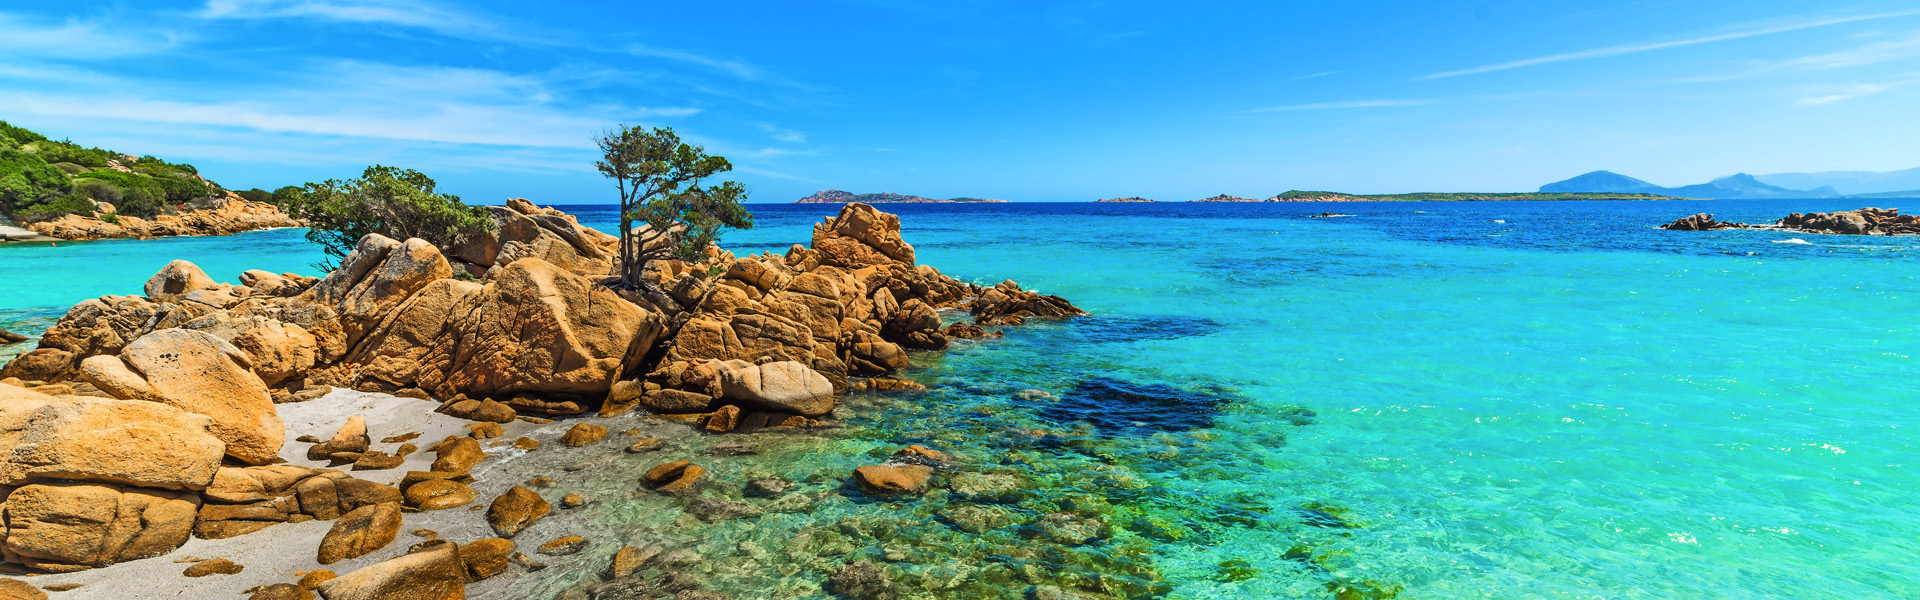 Capriccioli beach in Costa Smeralda, Sardinia